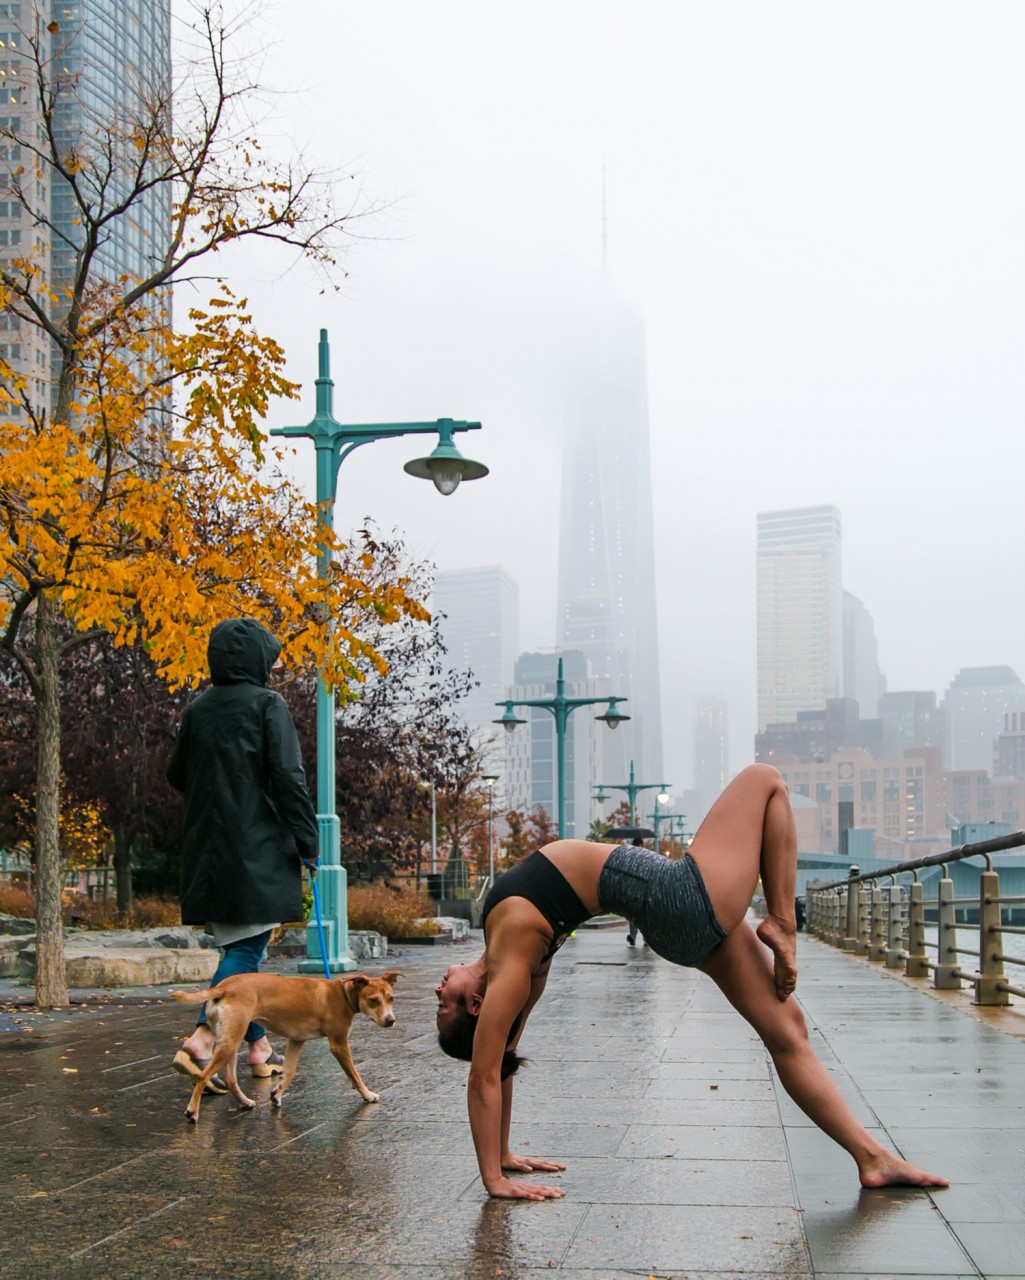 Публично: стриптиз и йога на улицах большого города город